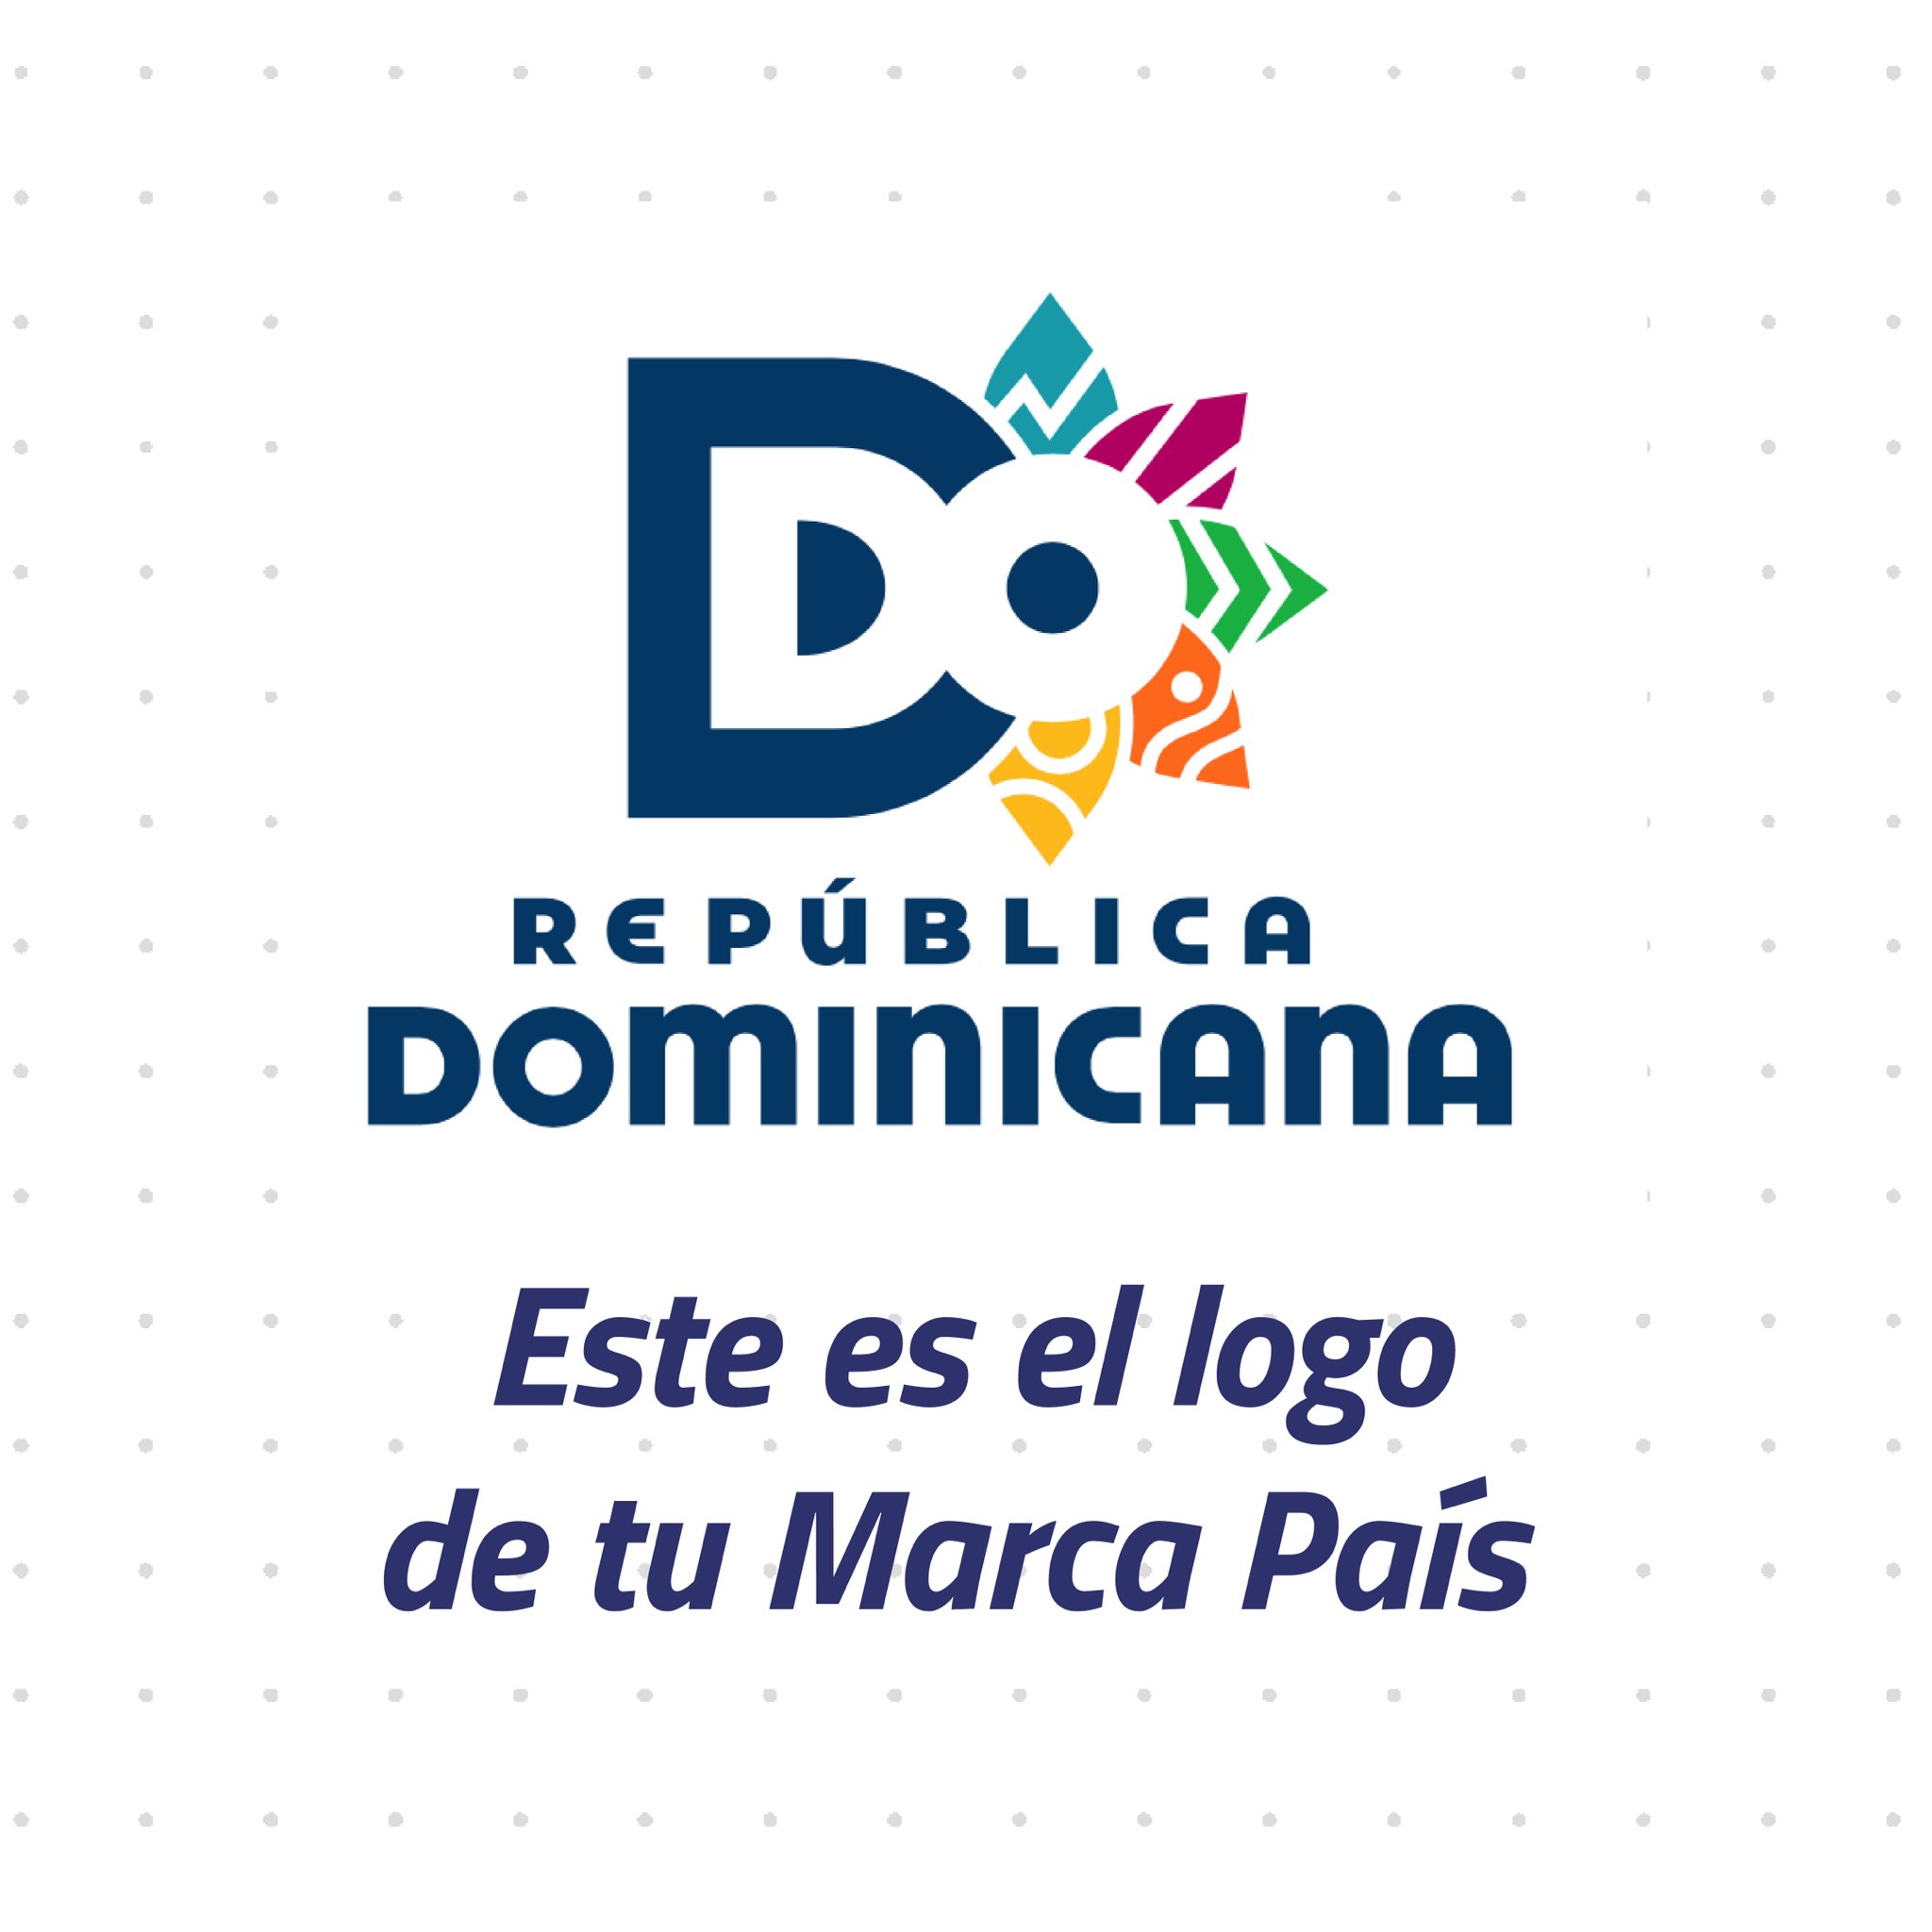 Marca País República Dominicana on Twitter: 